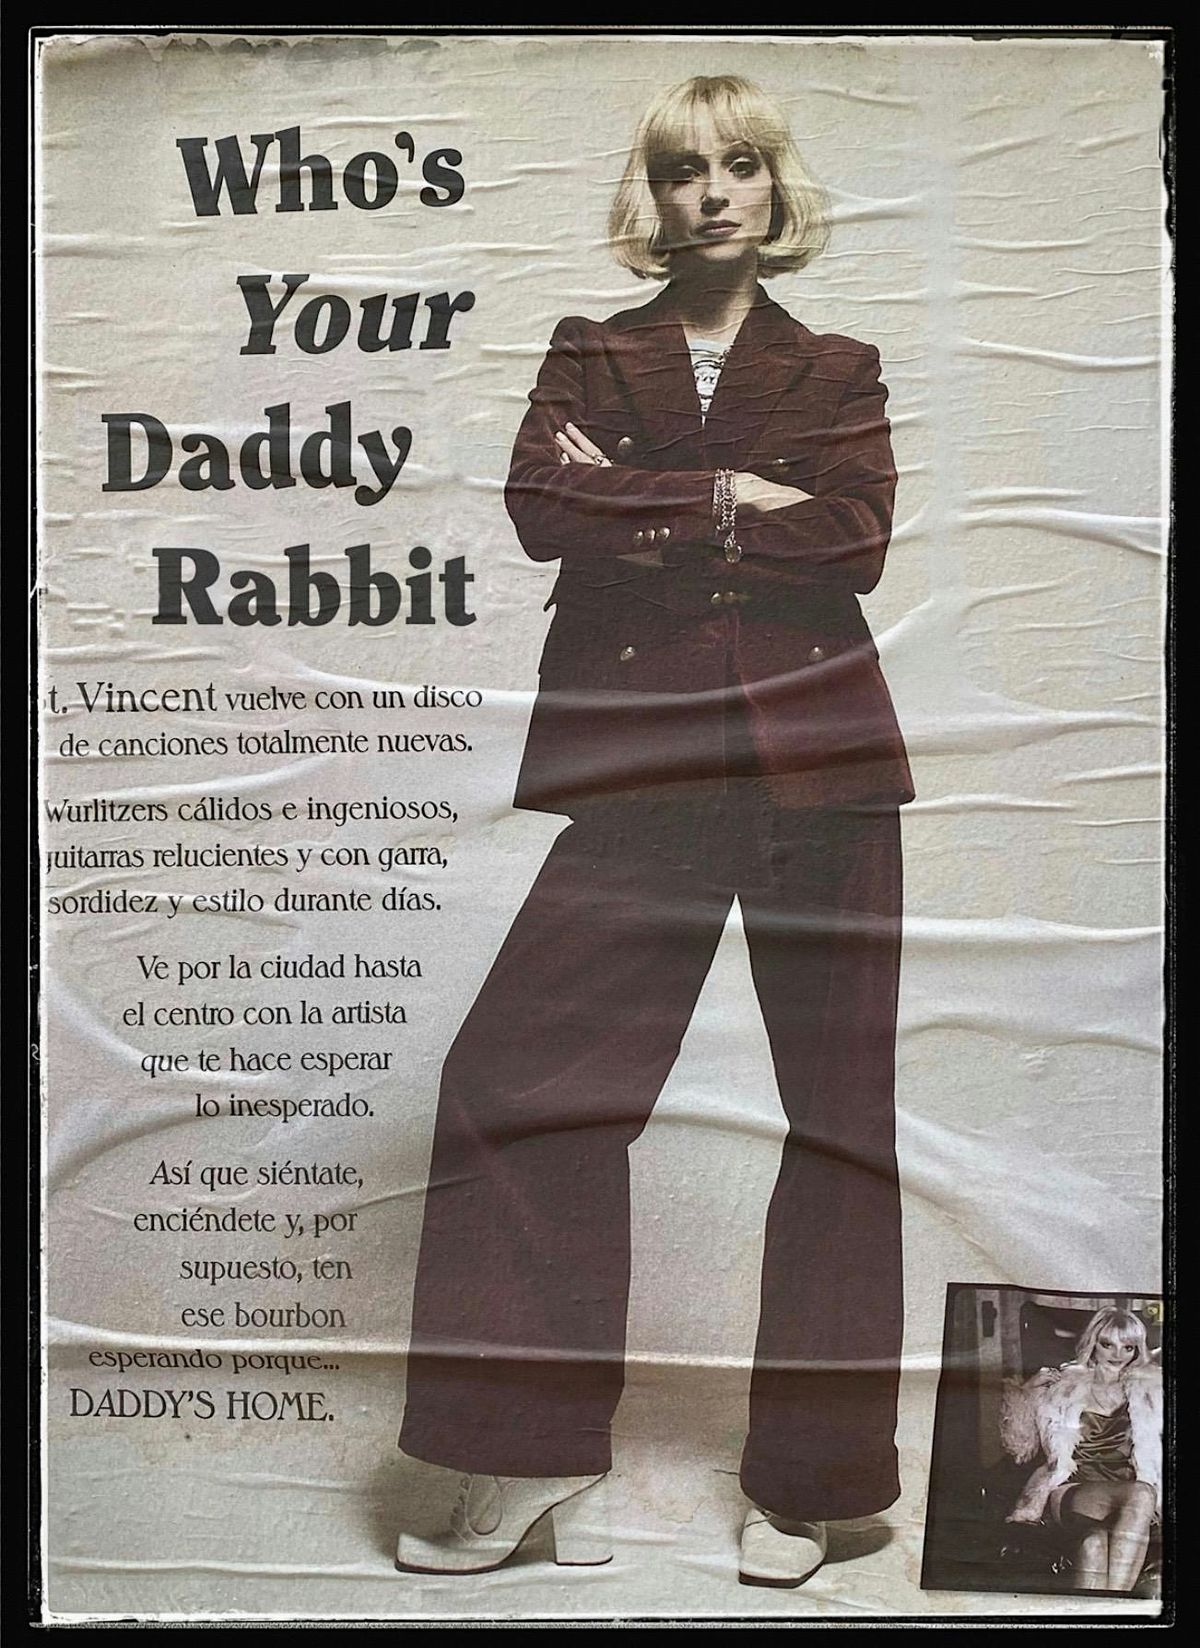 Daddy Rabbit July 19th, Vol. 75